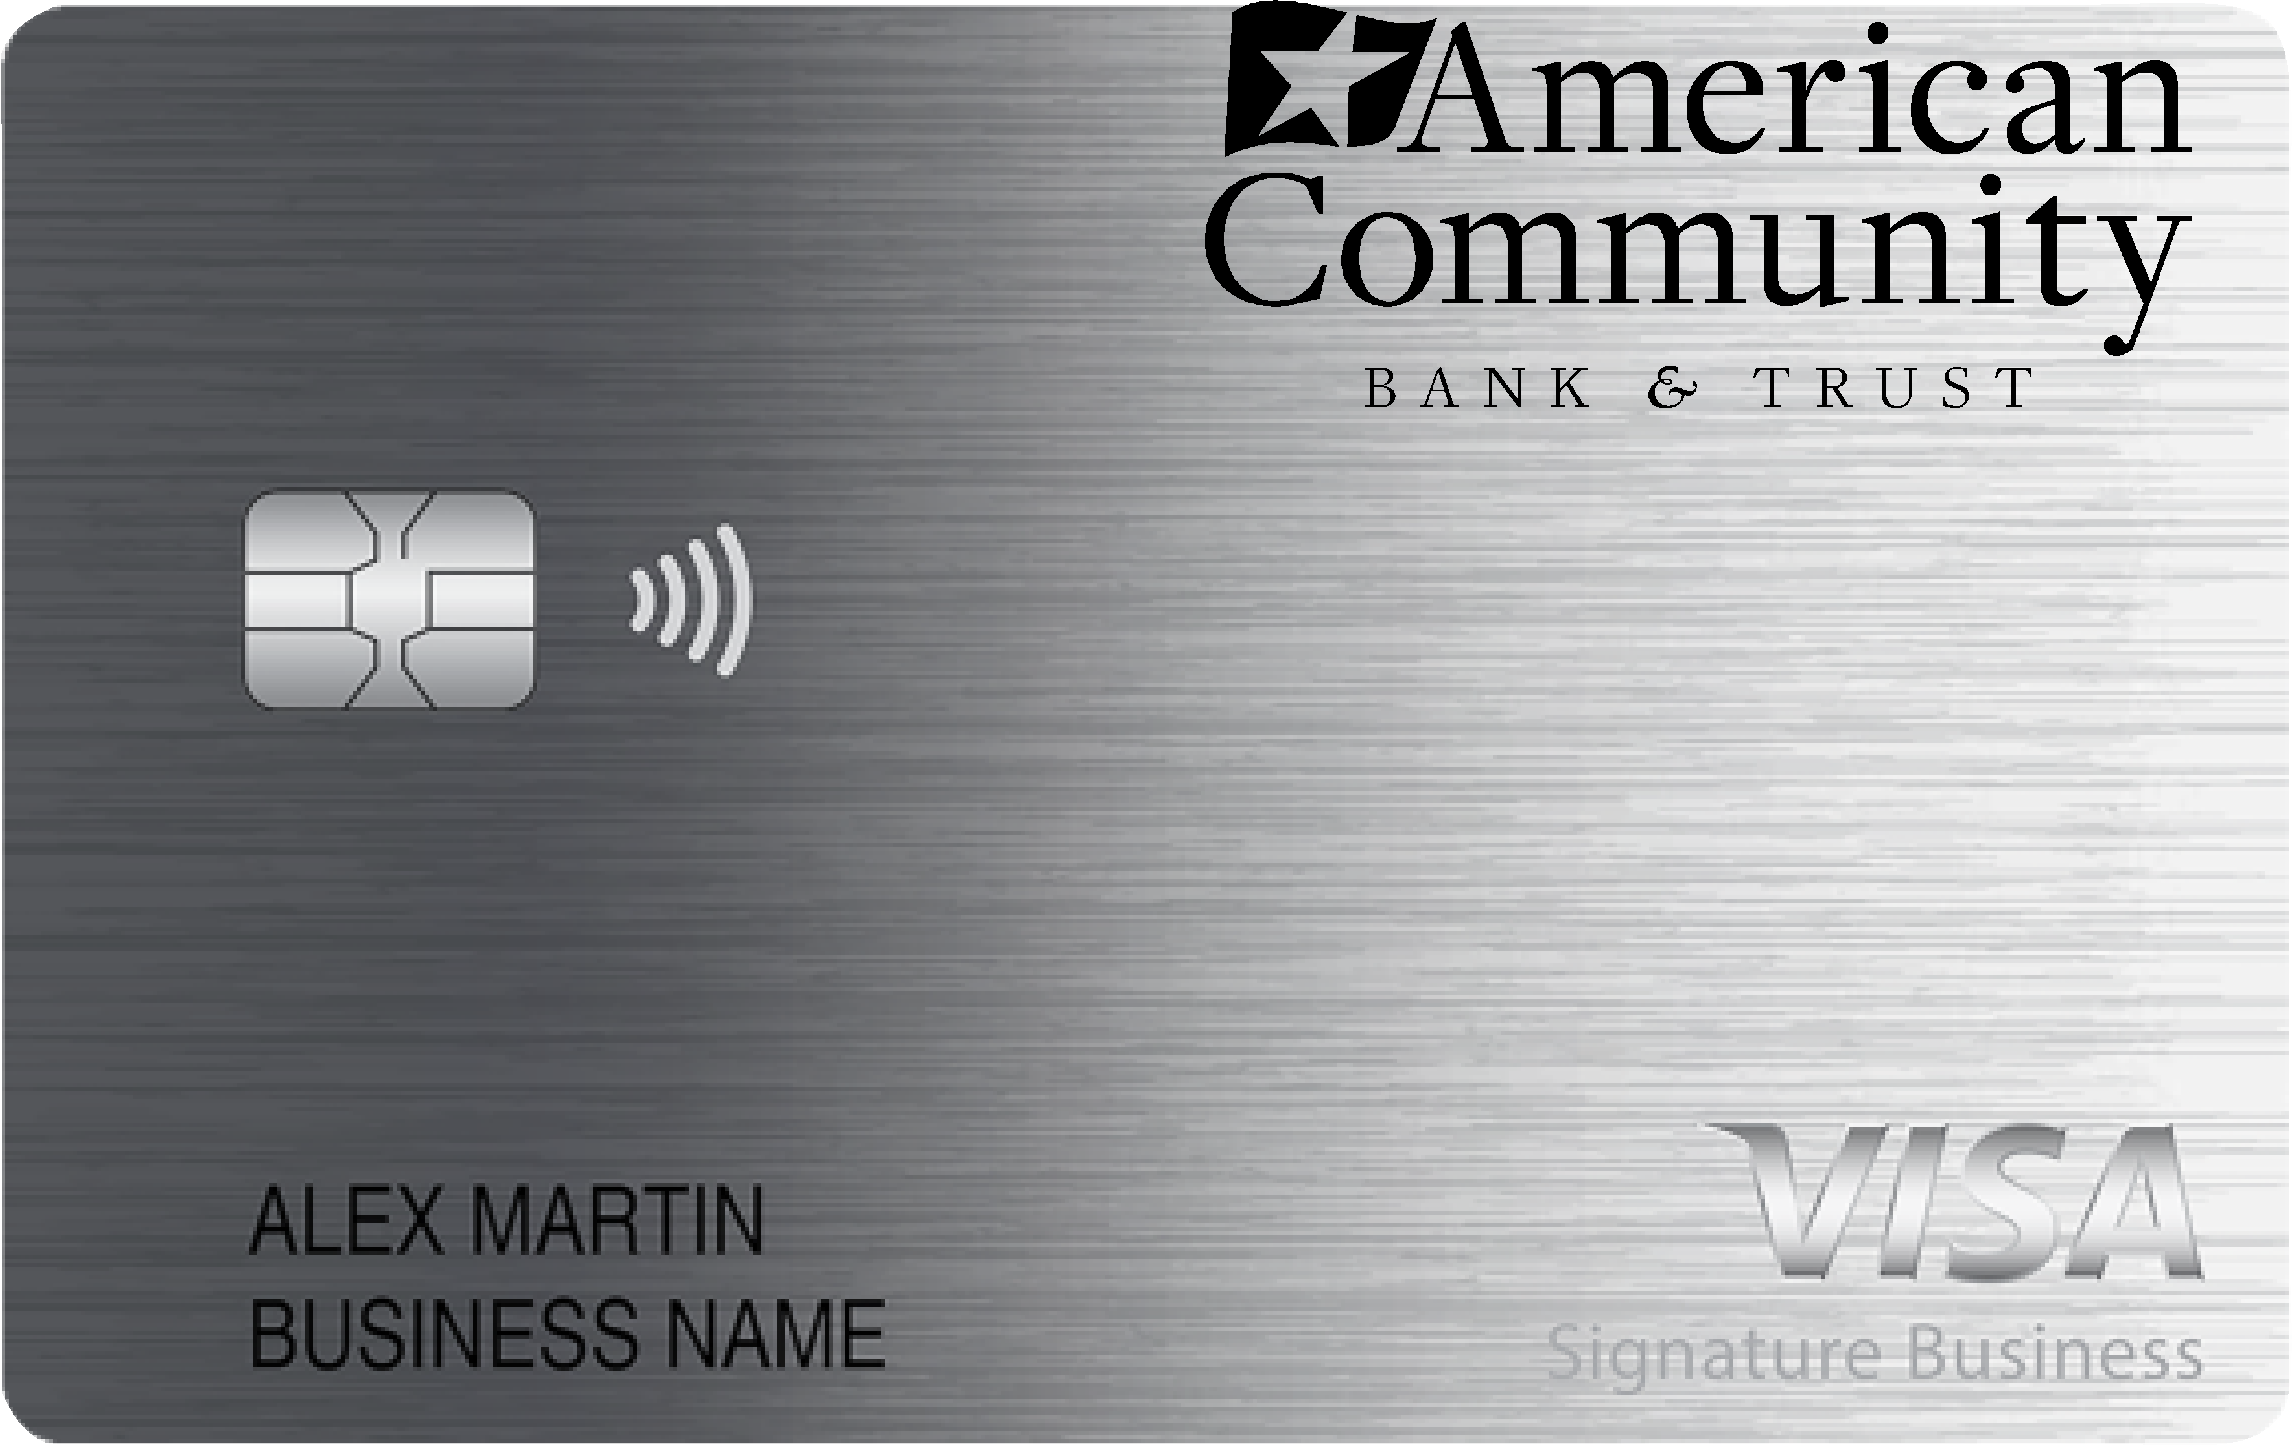 American Community Bank & Trust Smart Business Rewards Card